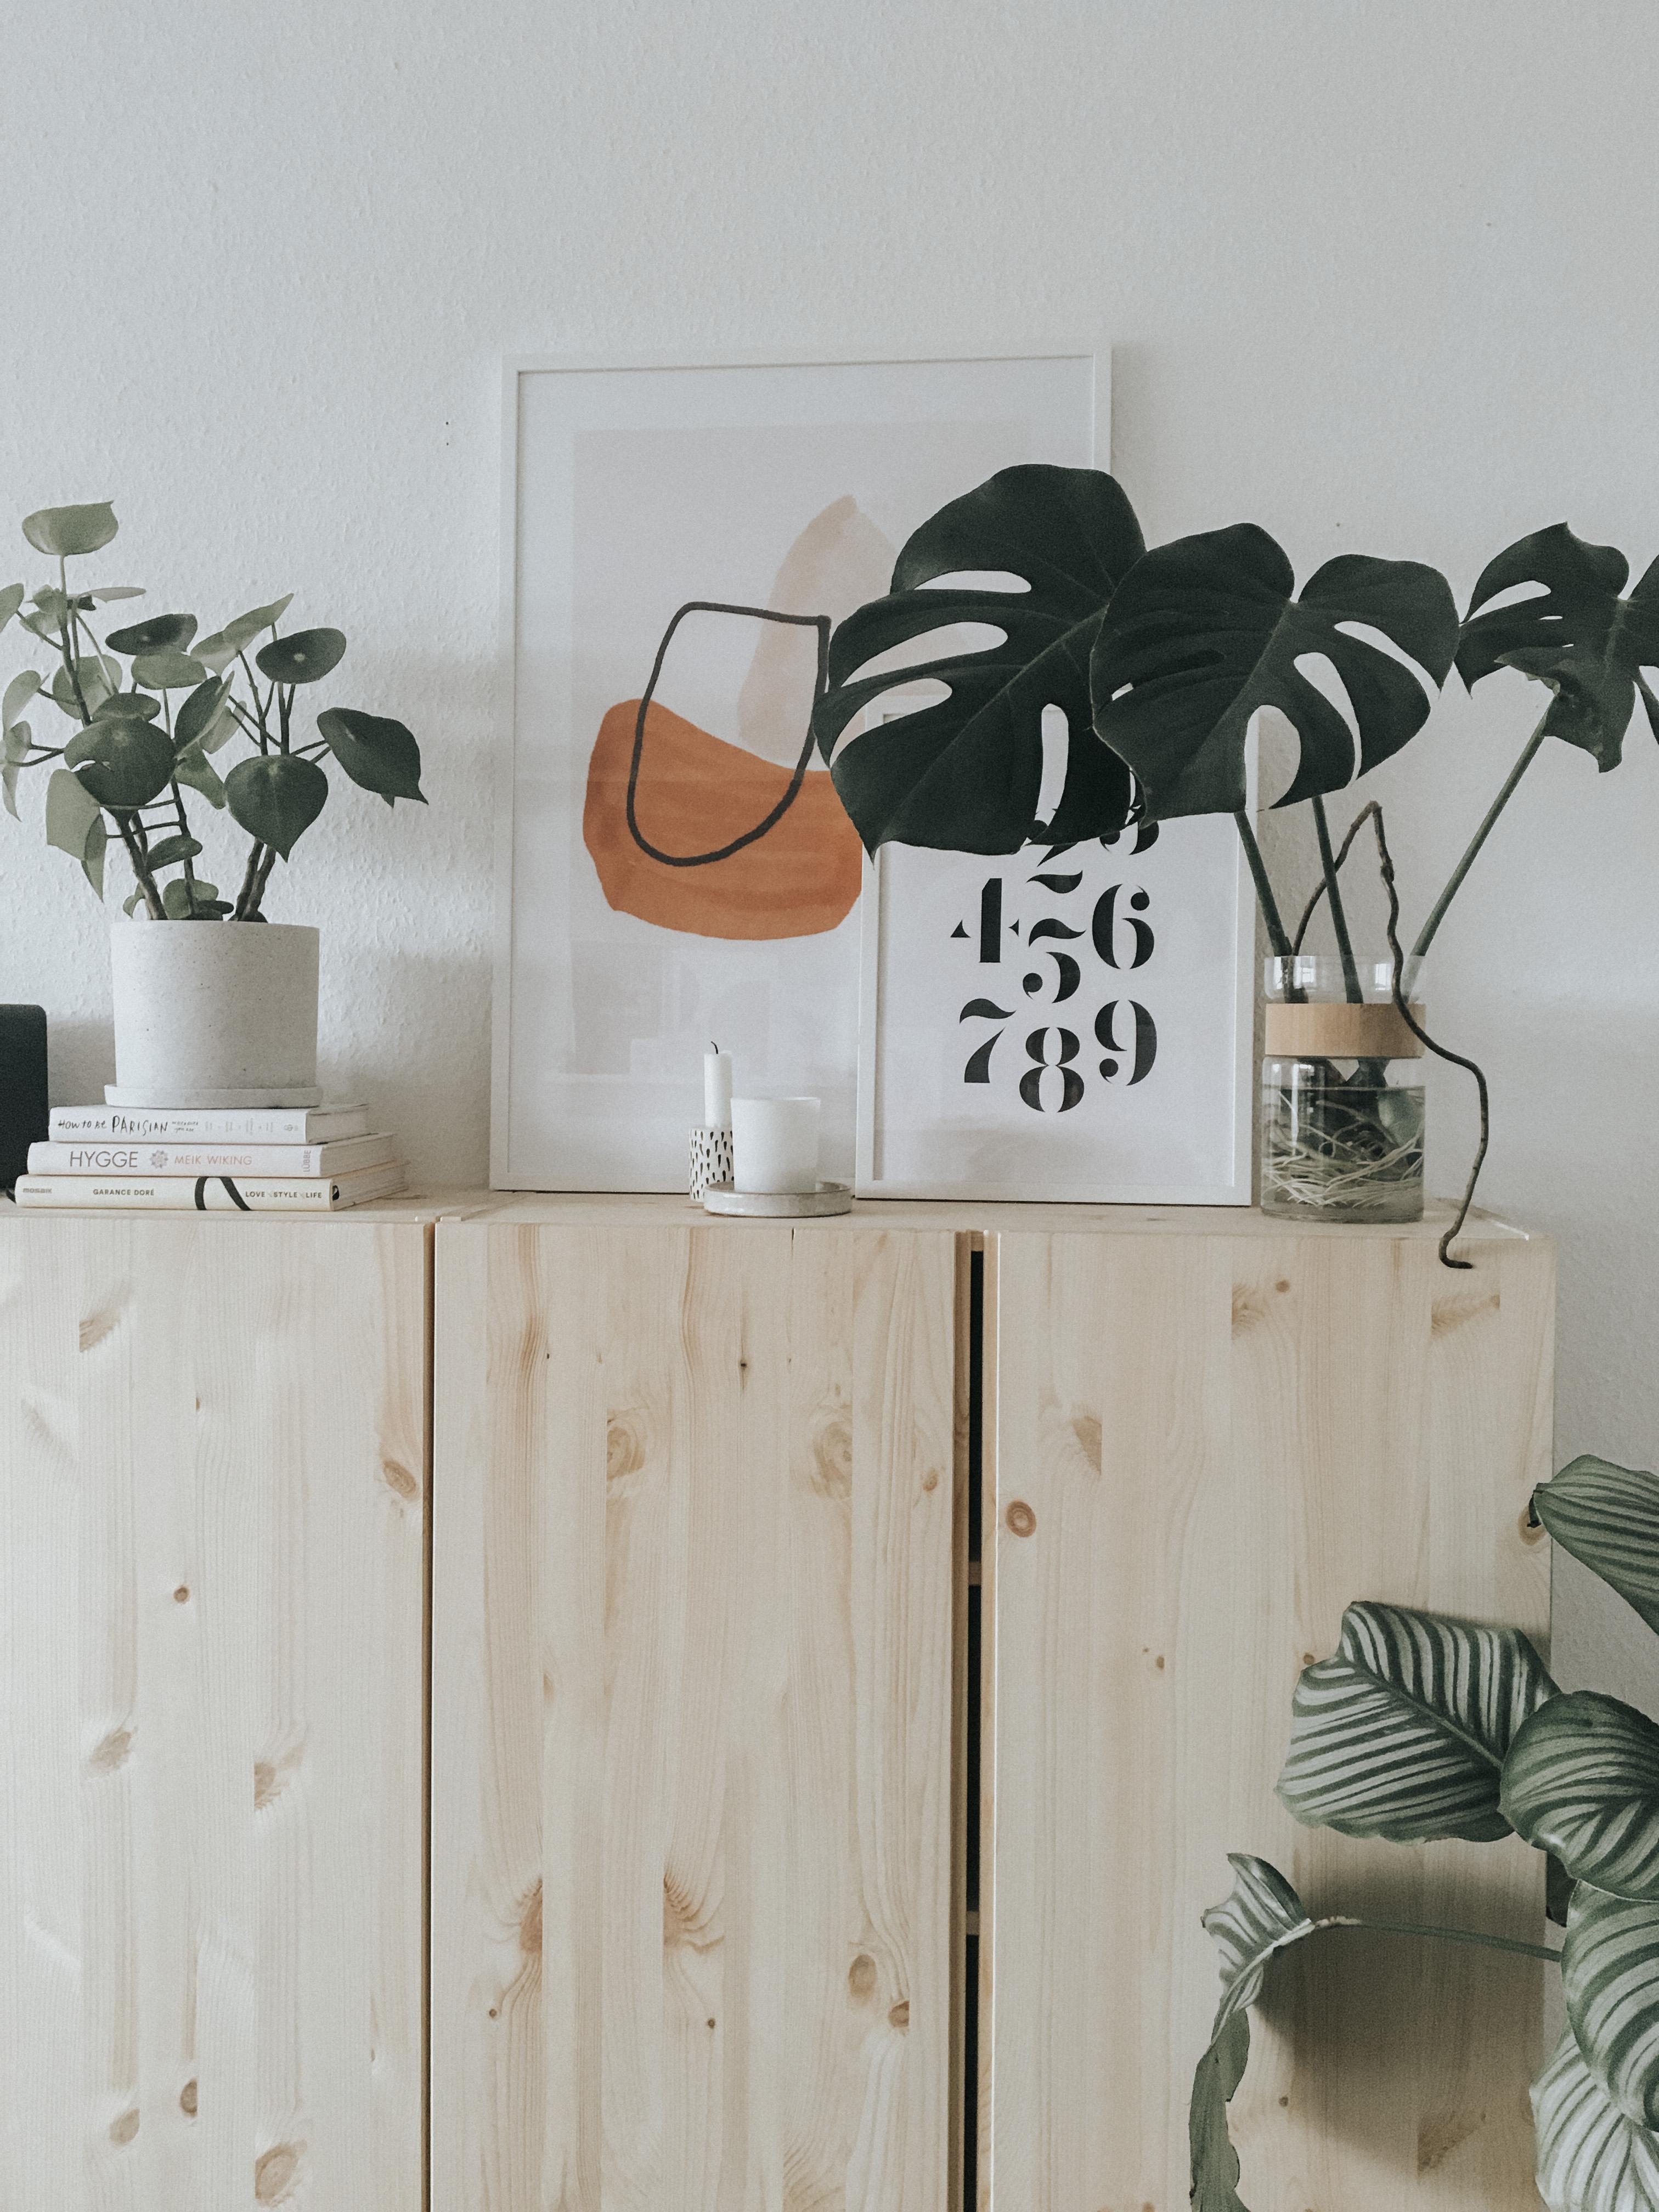 Plant-Friends 💚
#pflanzenliebe #couchstyle #livingroom #inspiration #scandi